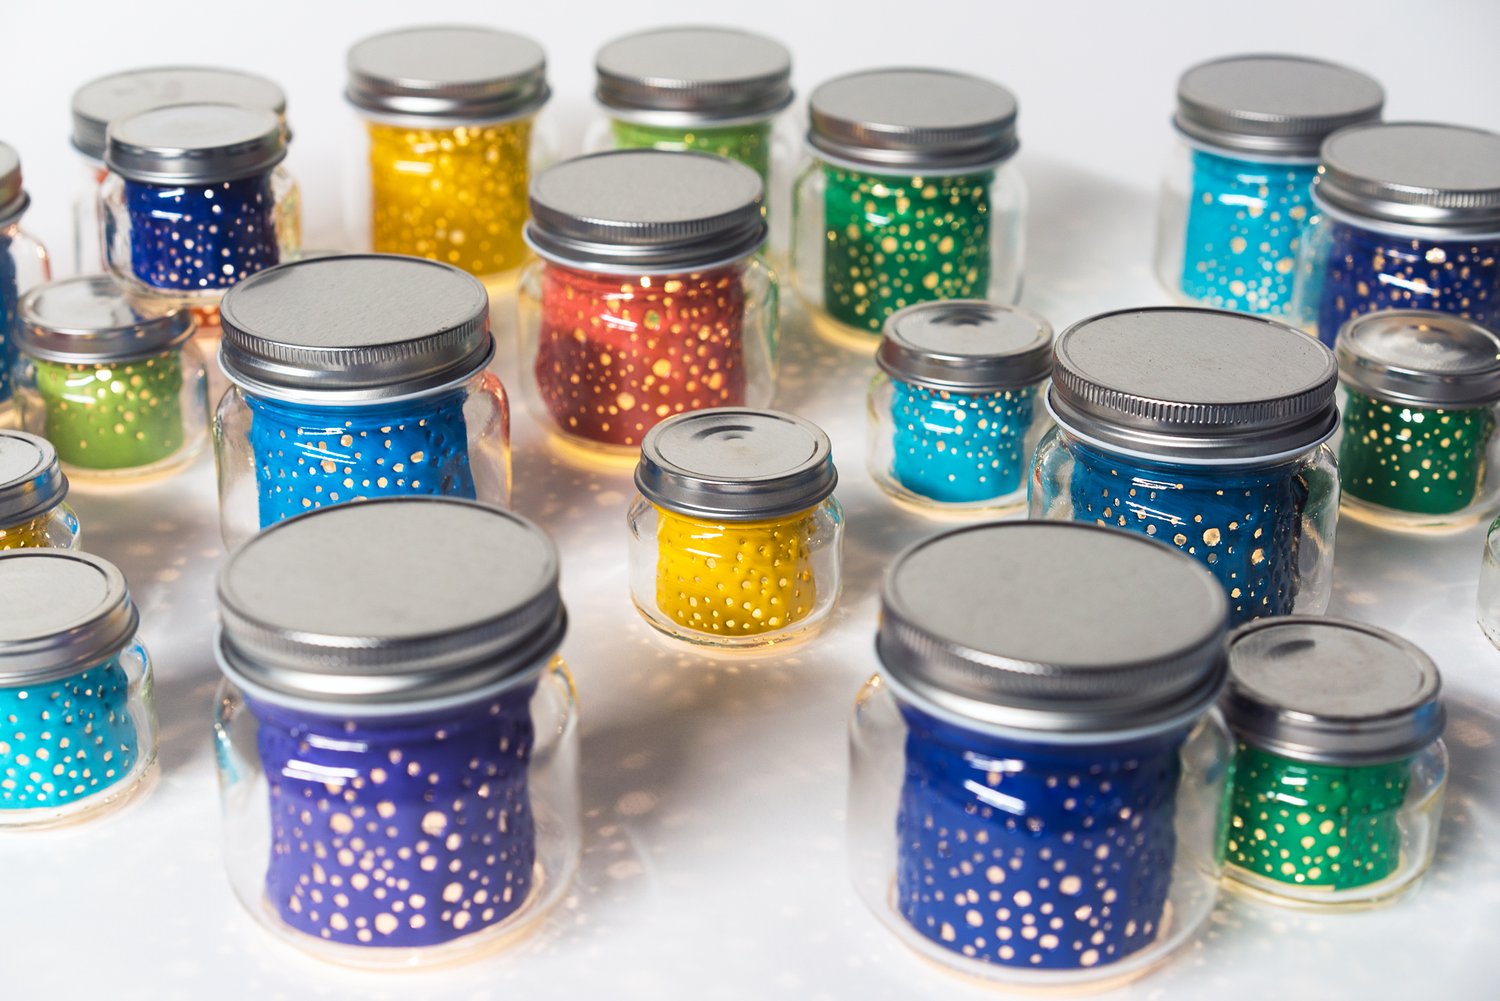 star jars - small — made by @heysp